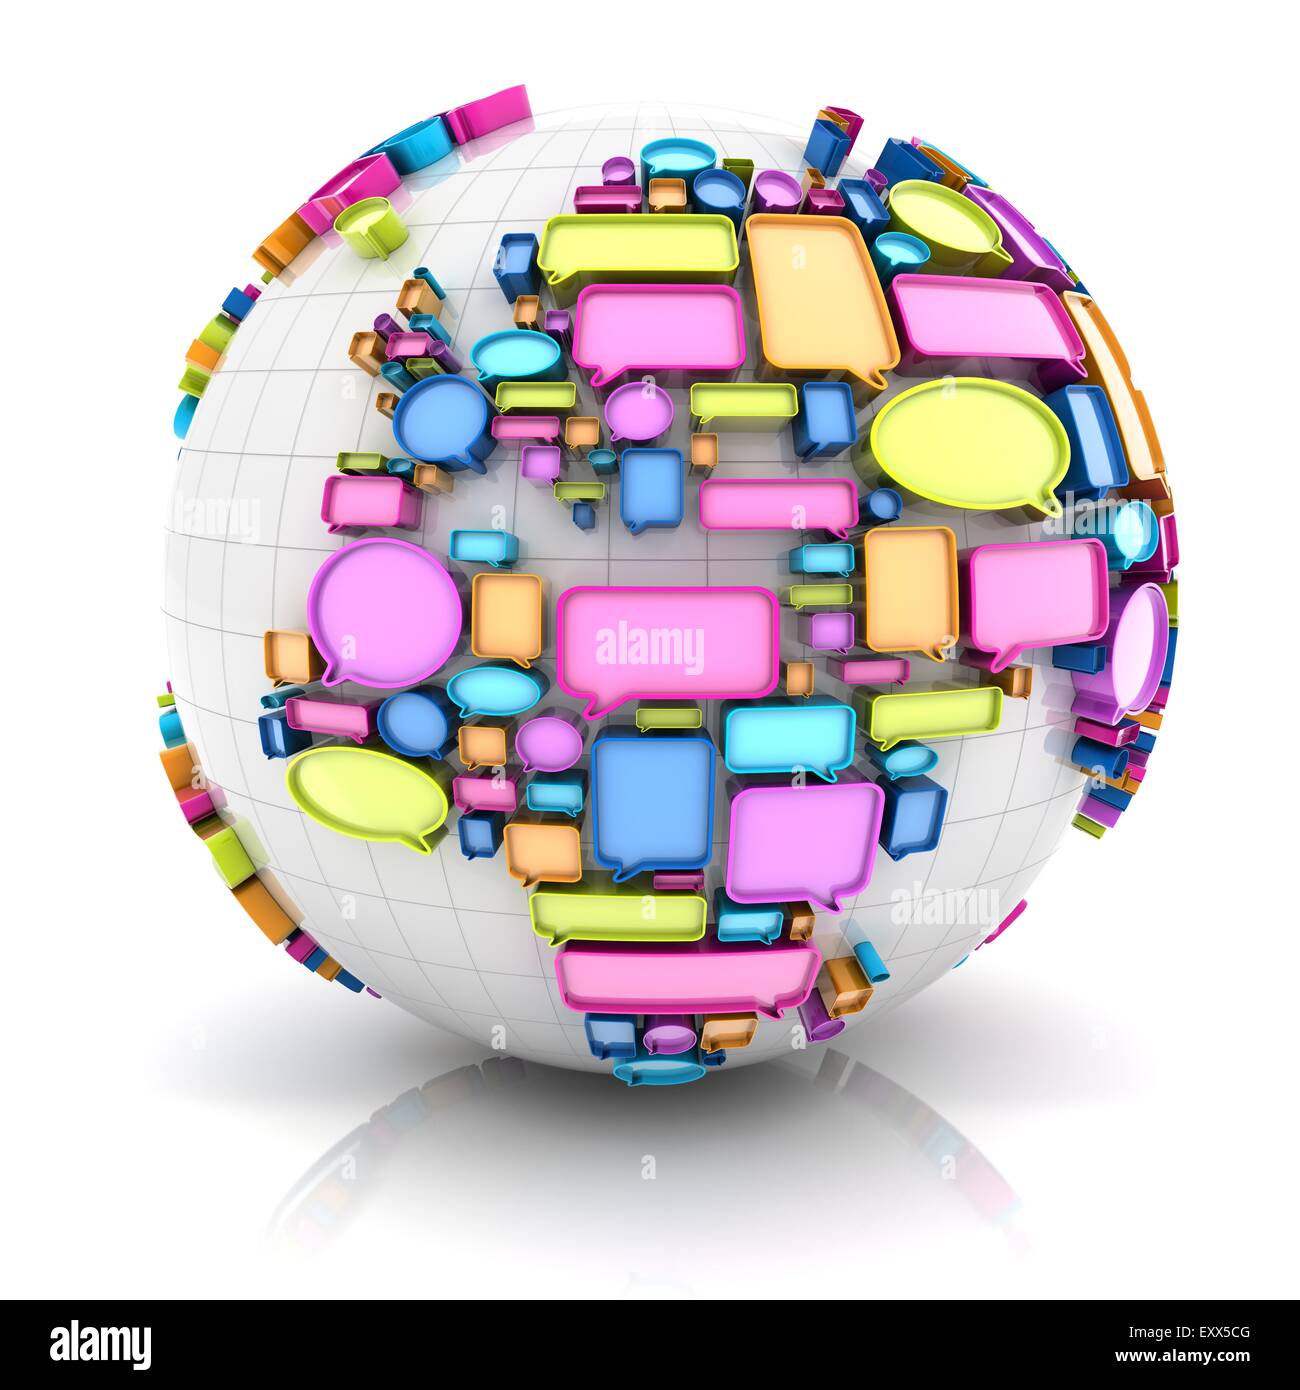 Globe with speech bubbles Stock Photo